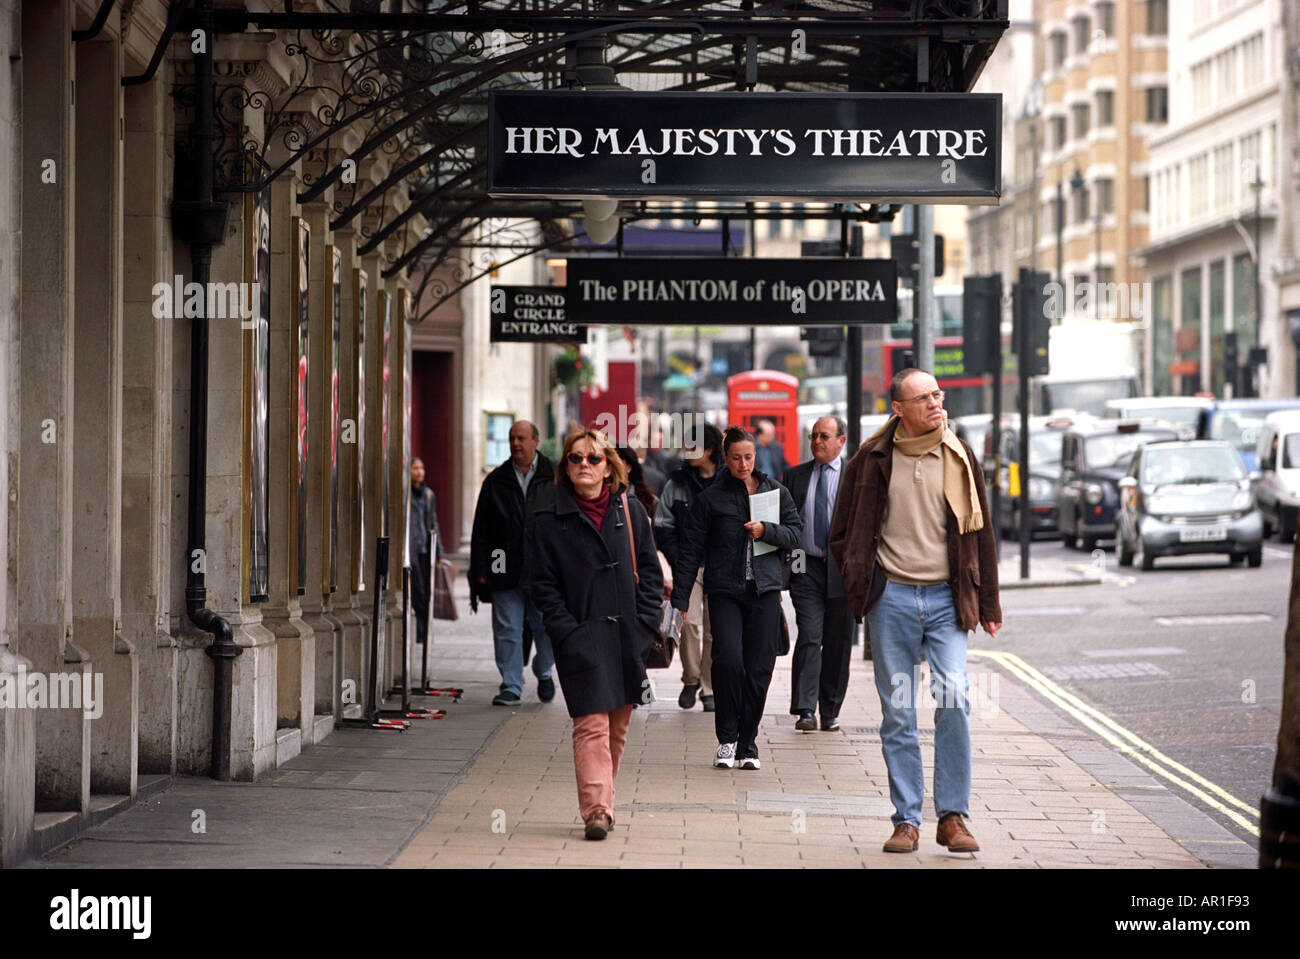 Her Majesty's Theatre London England UK Stock Photo